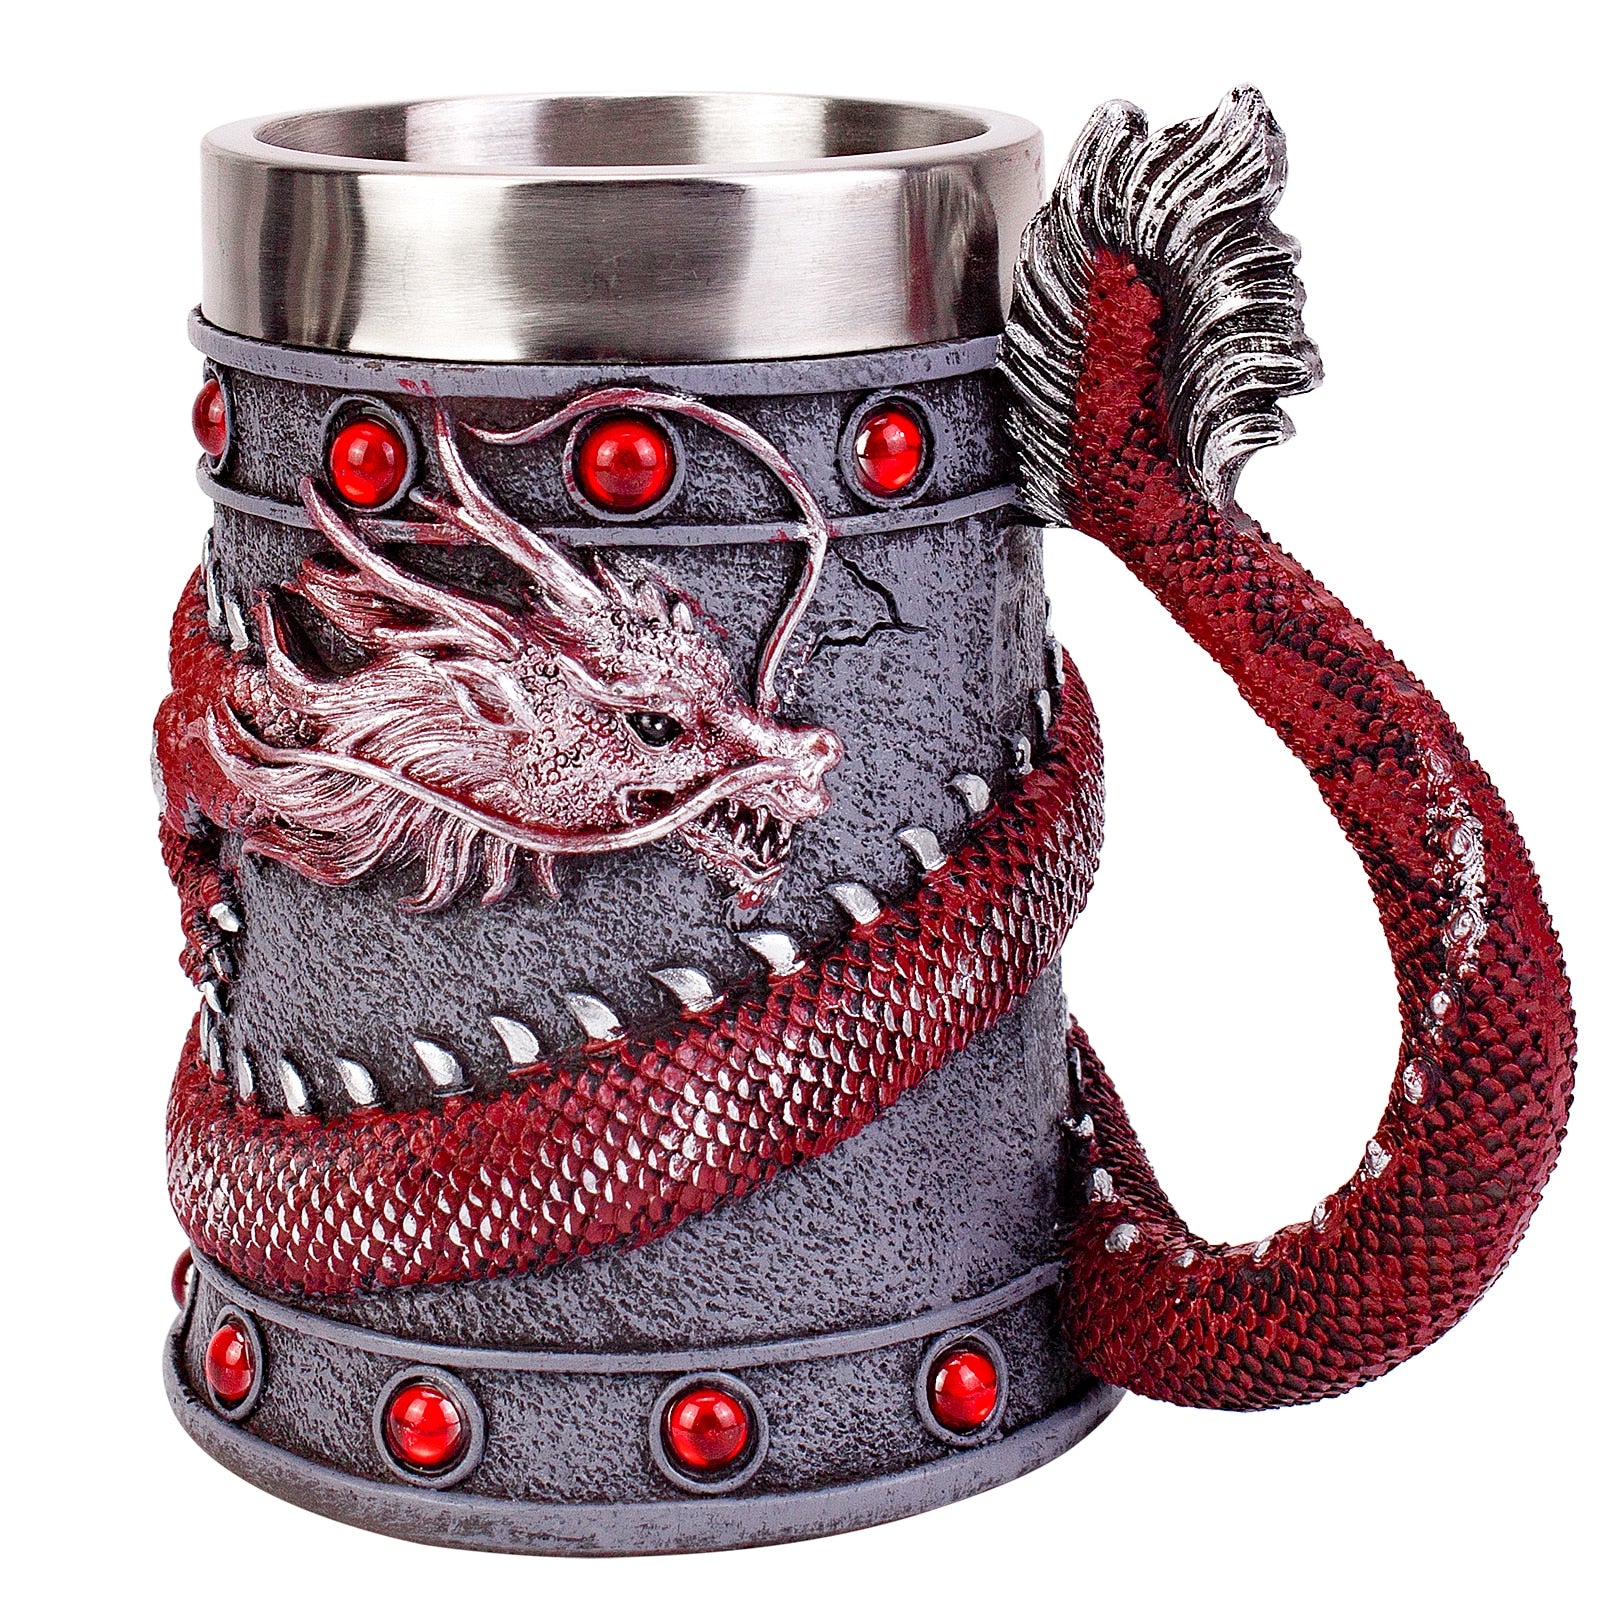 Elegant and refined dragon beer mug